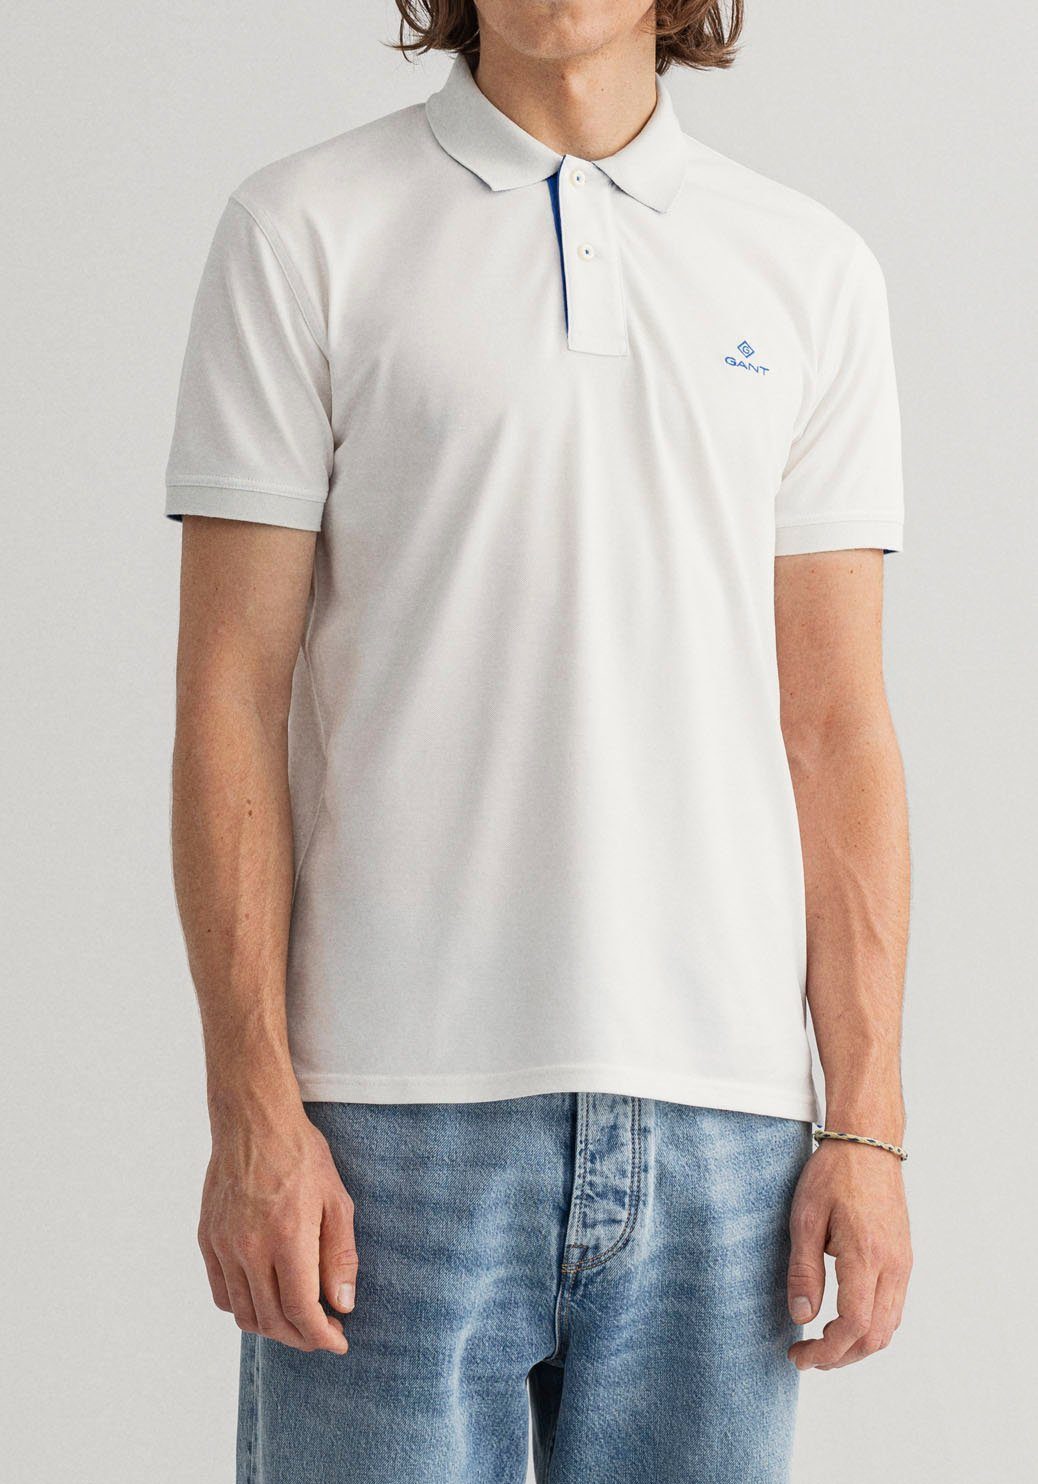 weiß-kontrastfarbene RUGGER, Gant Elasthan CONTRAST COLLAR durch SS formstabil PIQUE Details Poloshirt